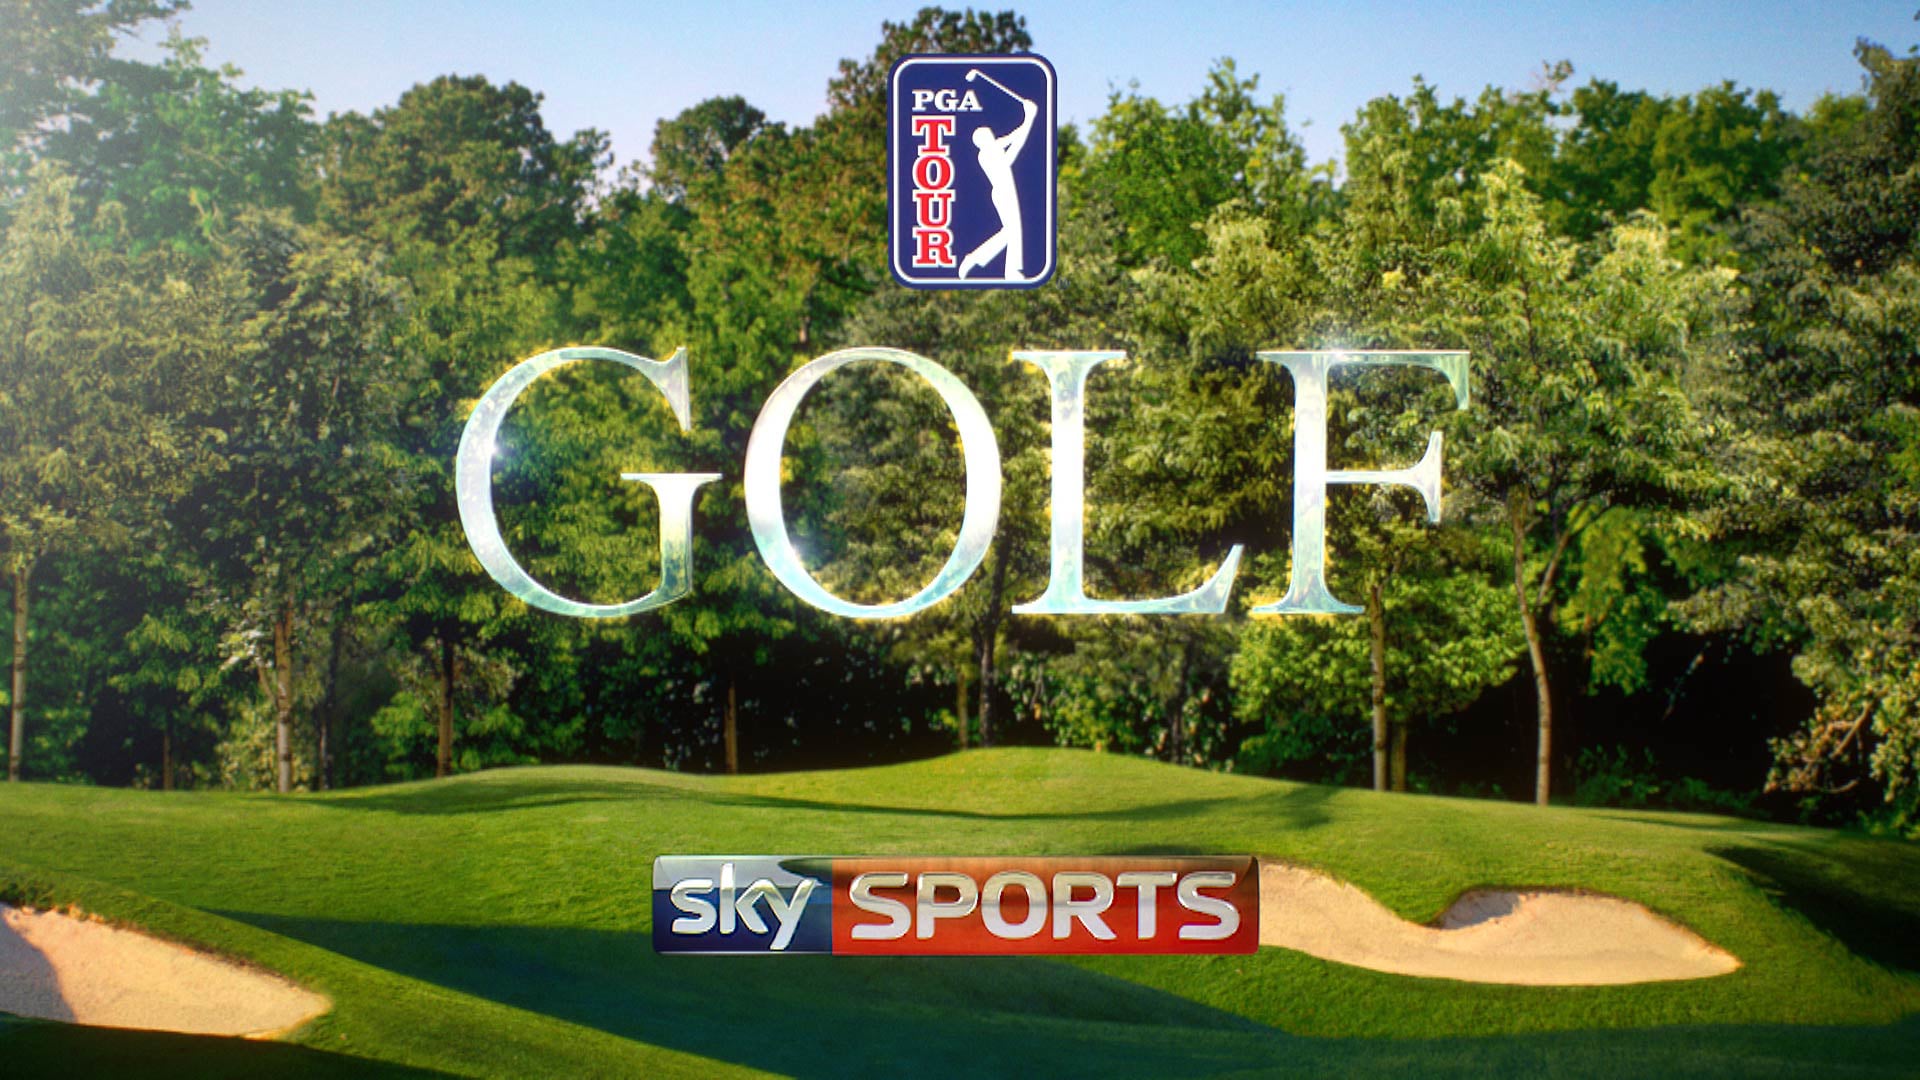 Sky Sports, PGA Tour Golf